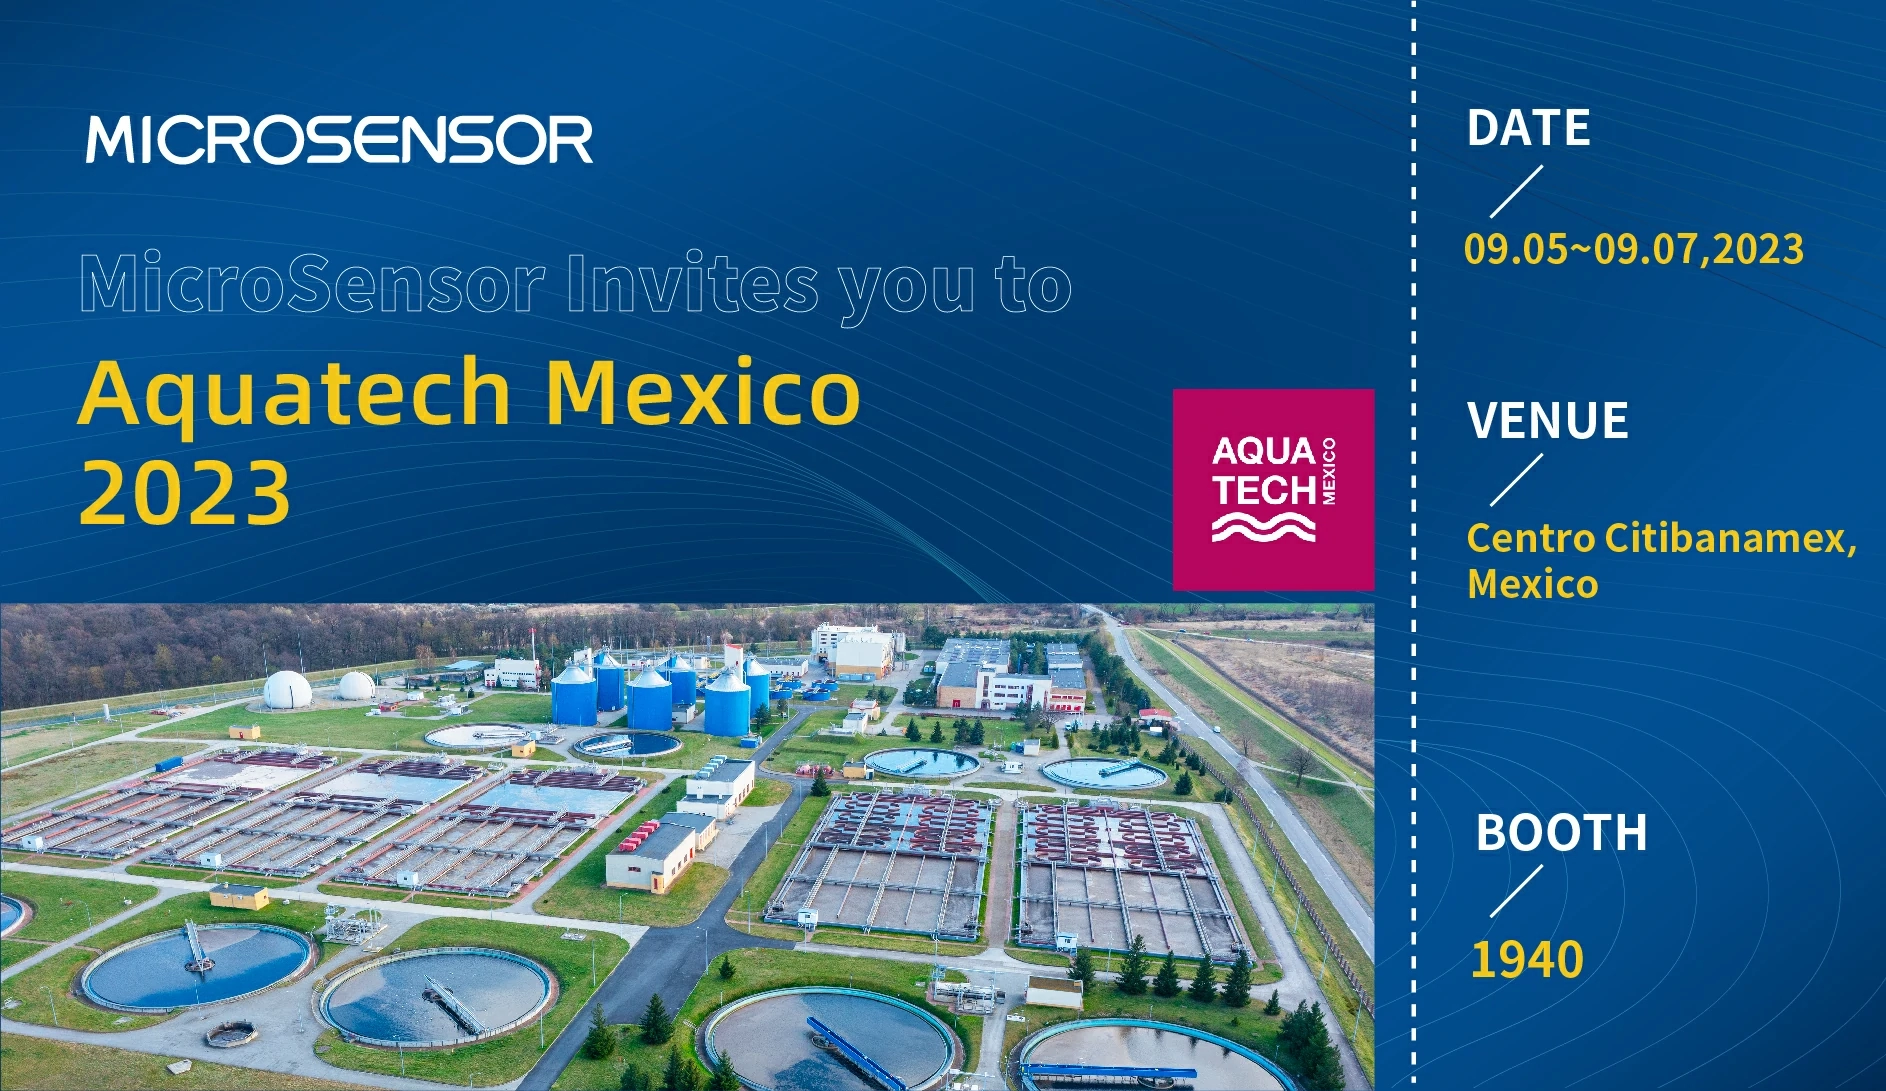 Meet Micro Sensor at Aquatech Mexico 2023